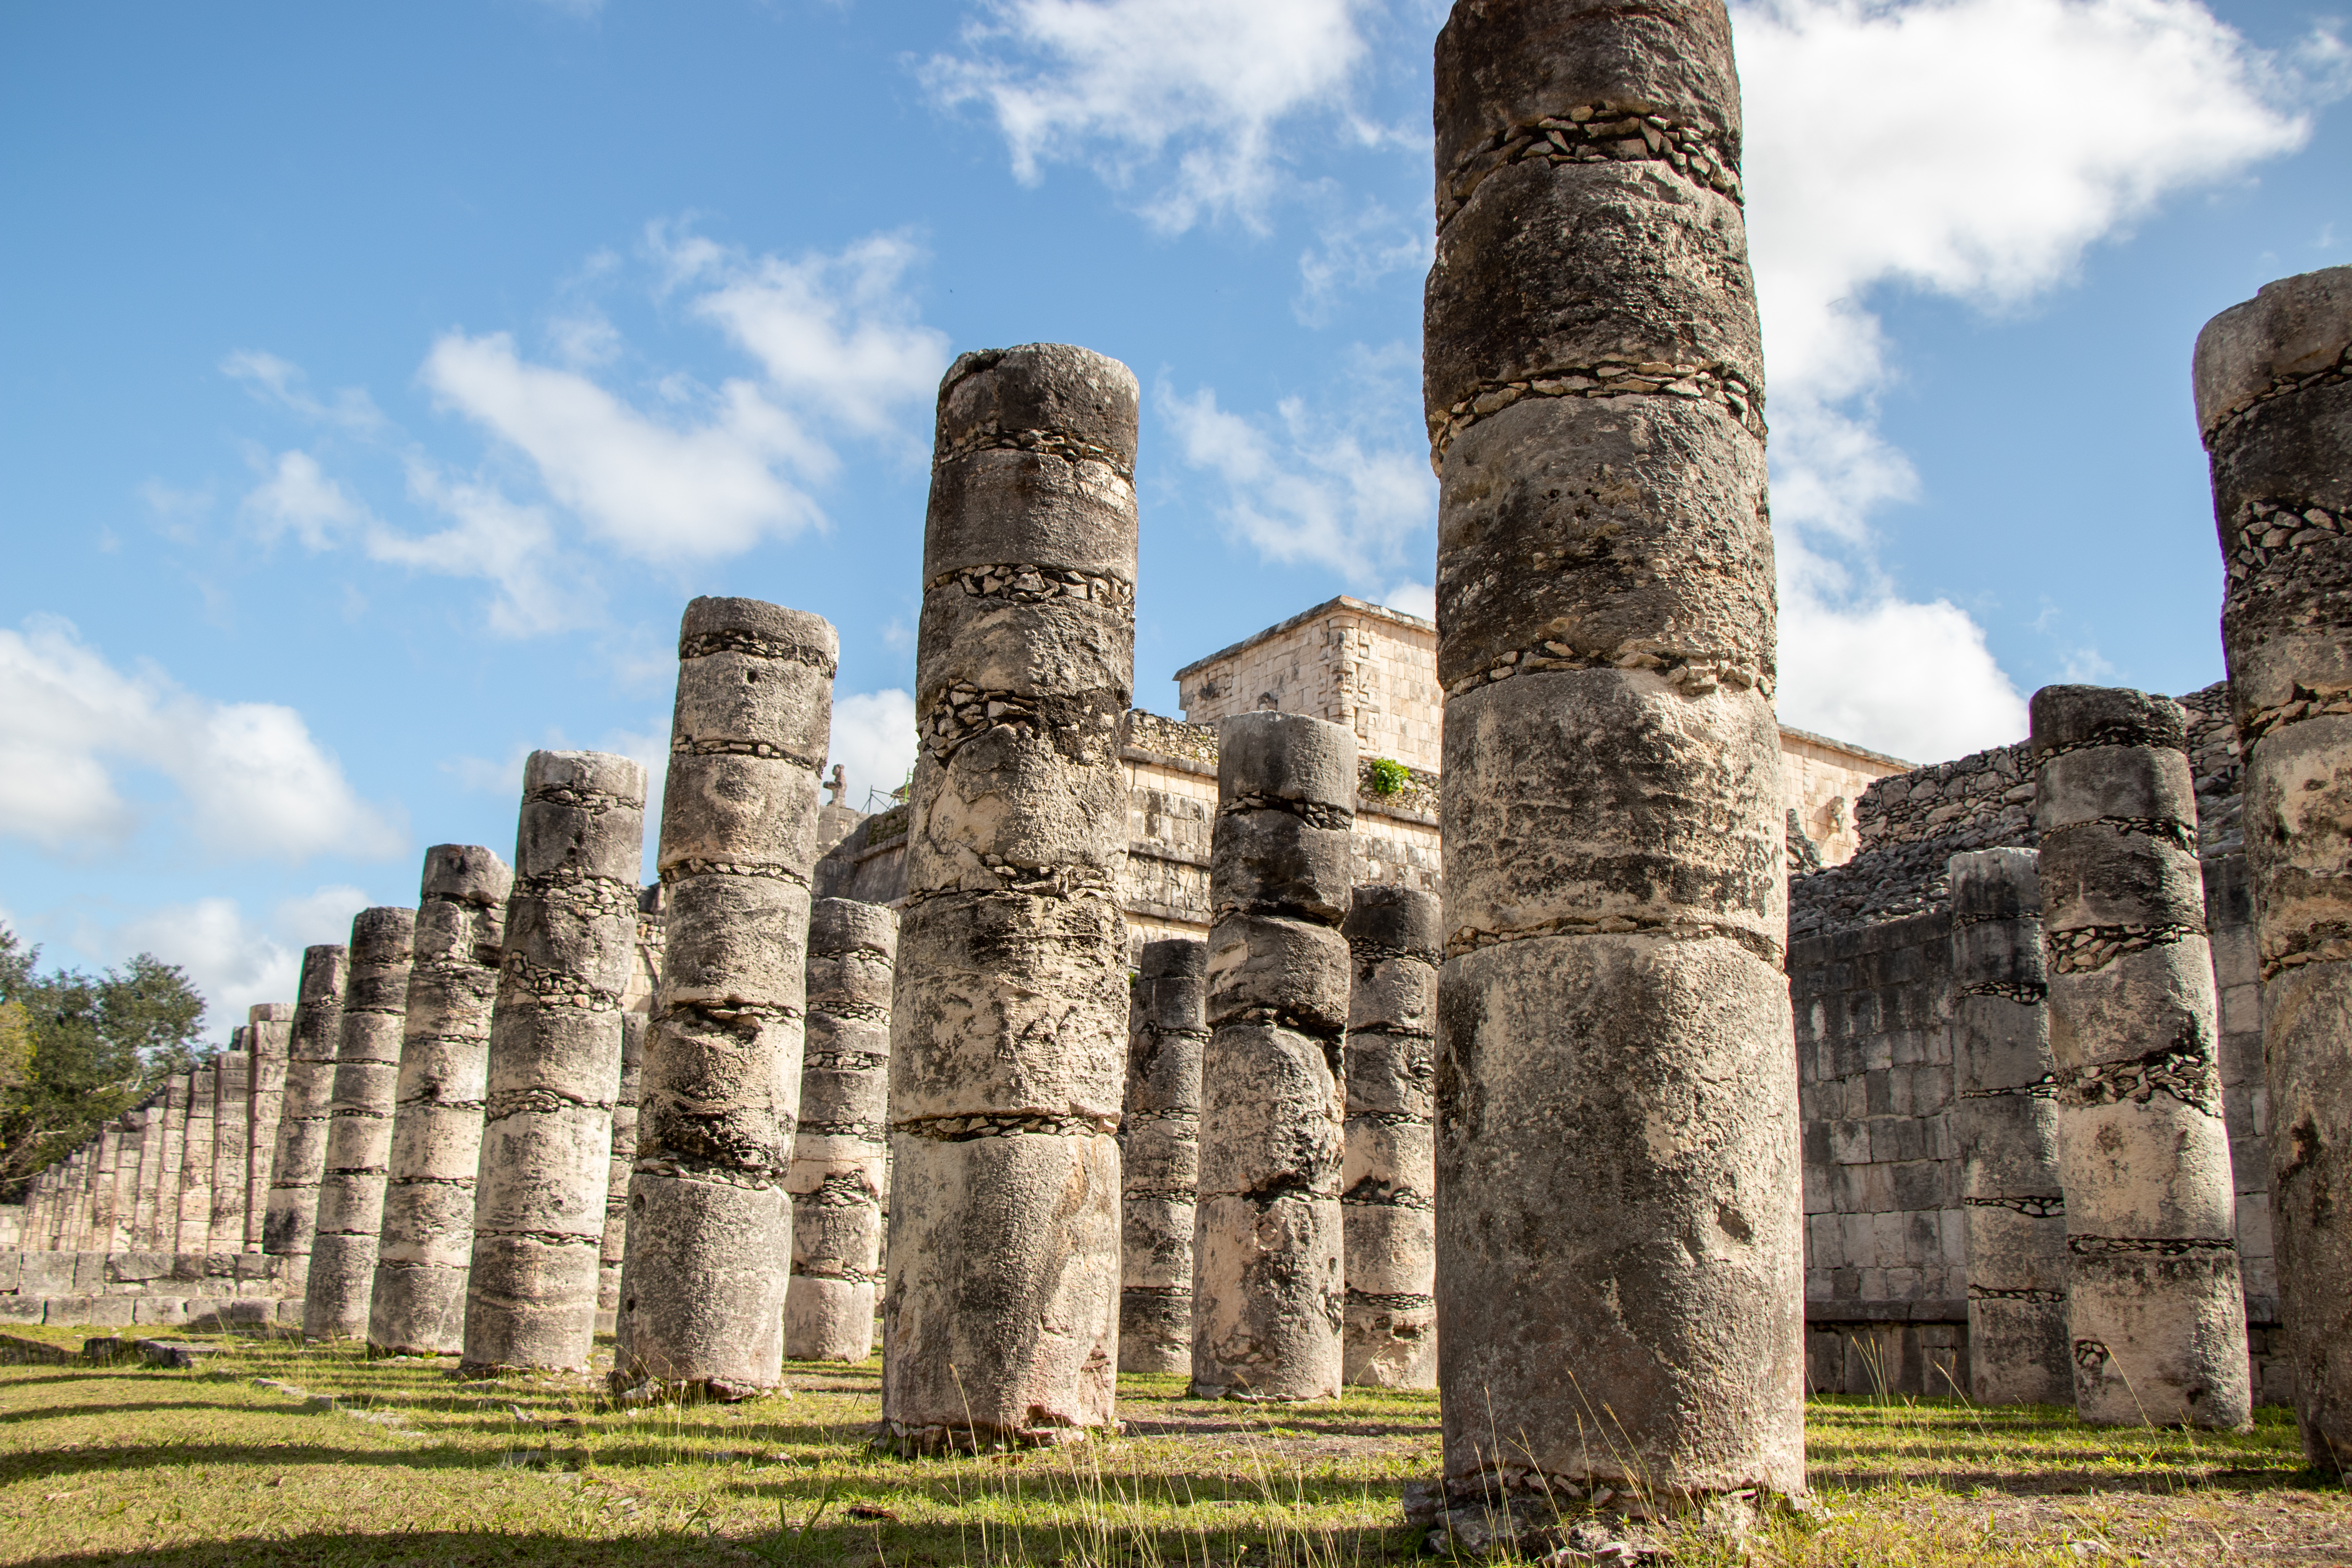 The thousand columns at Chichen Itza